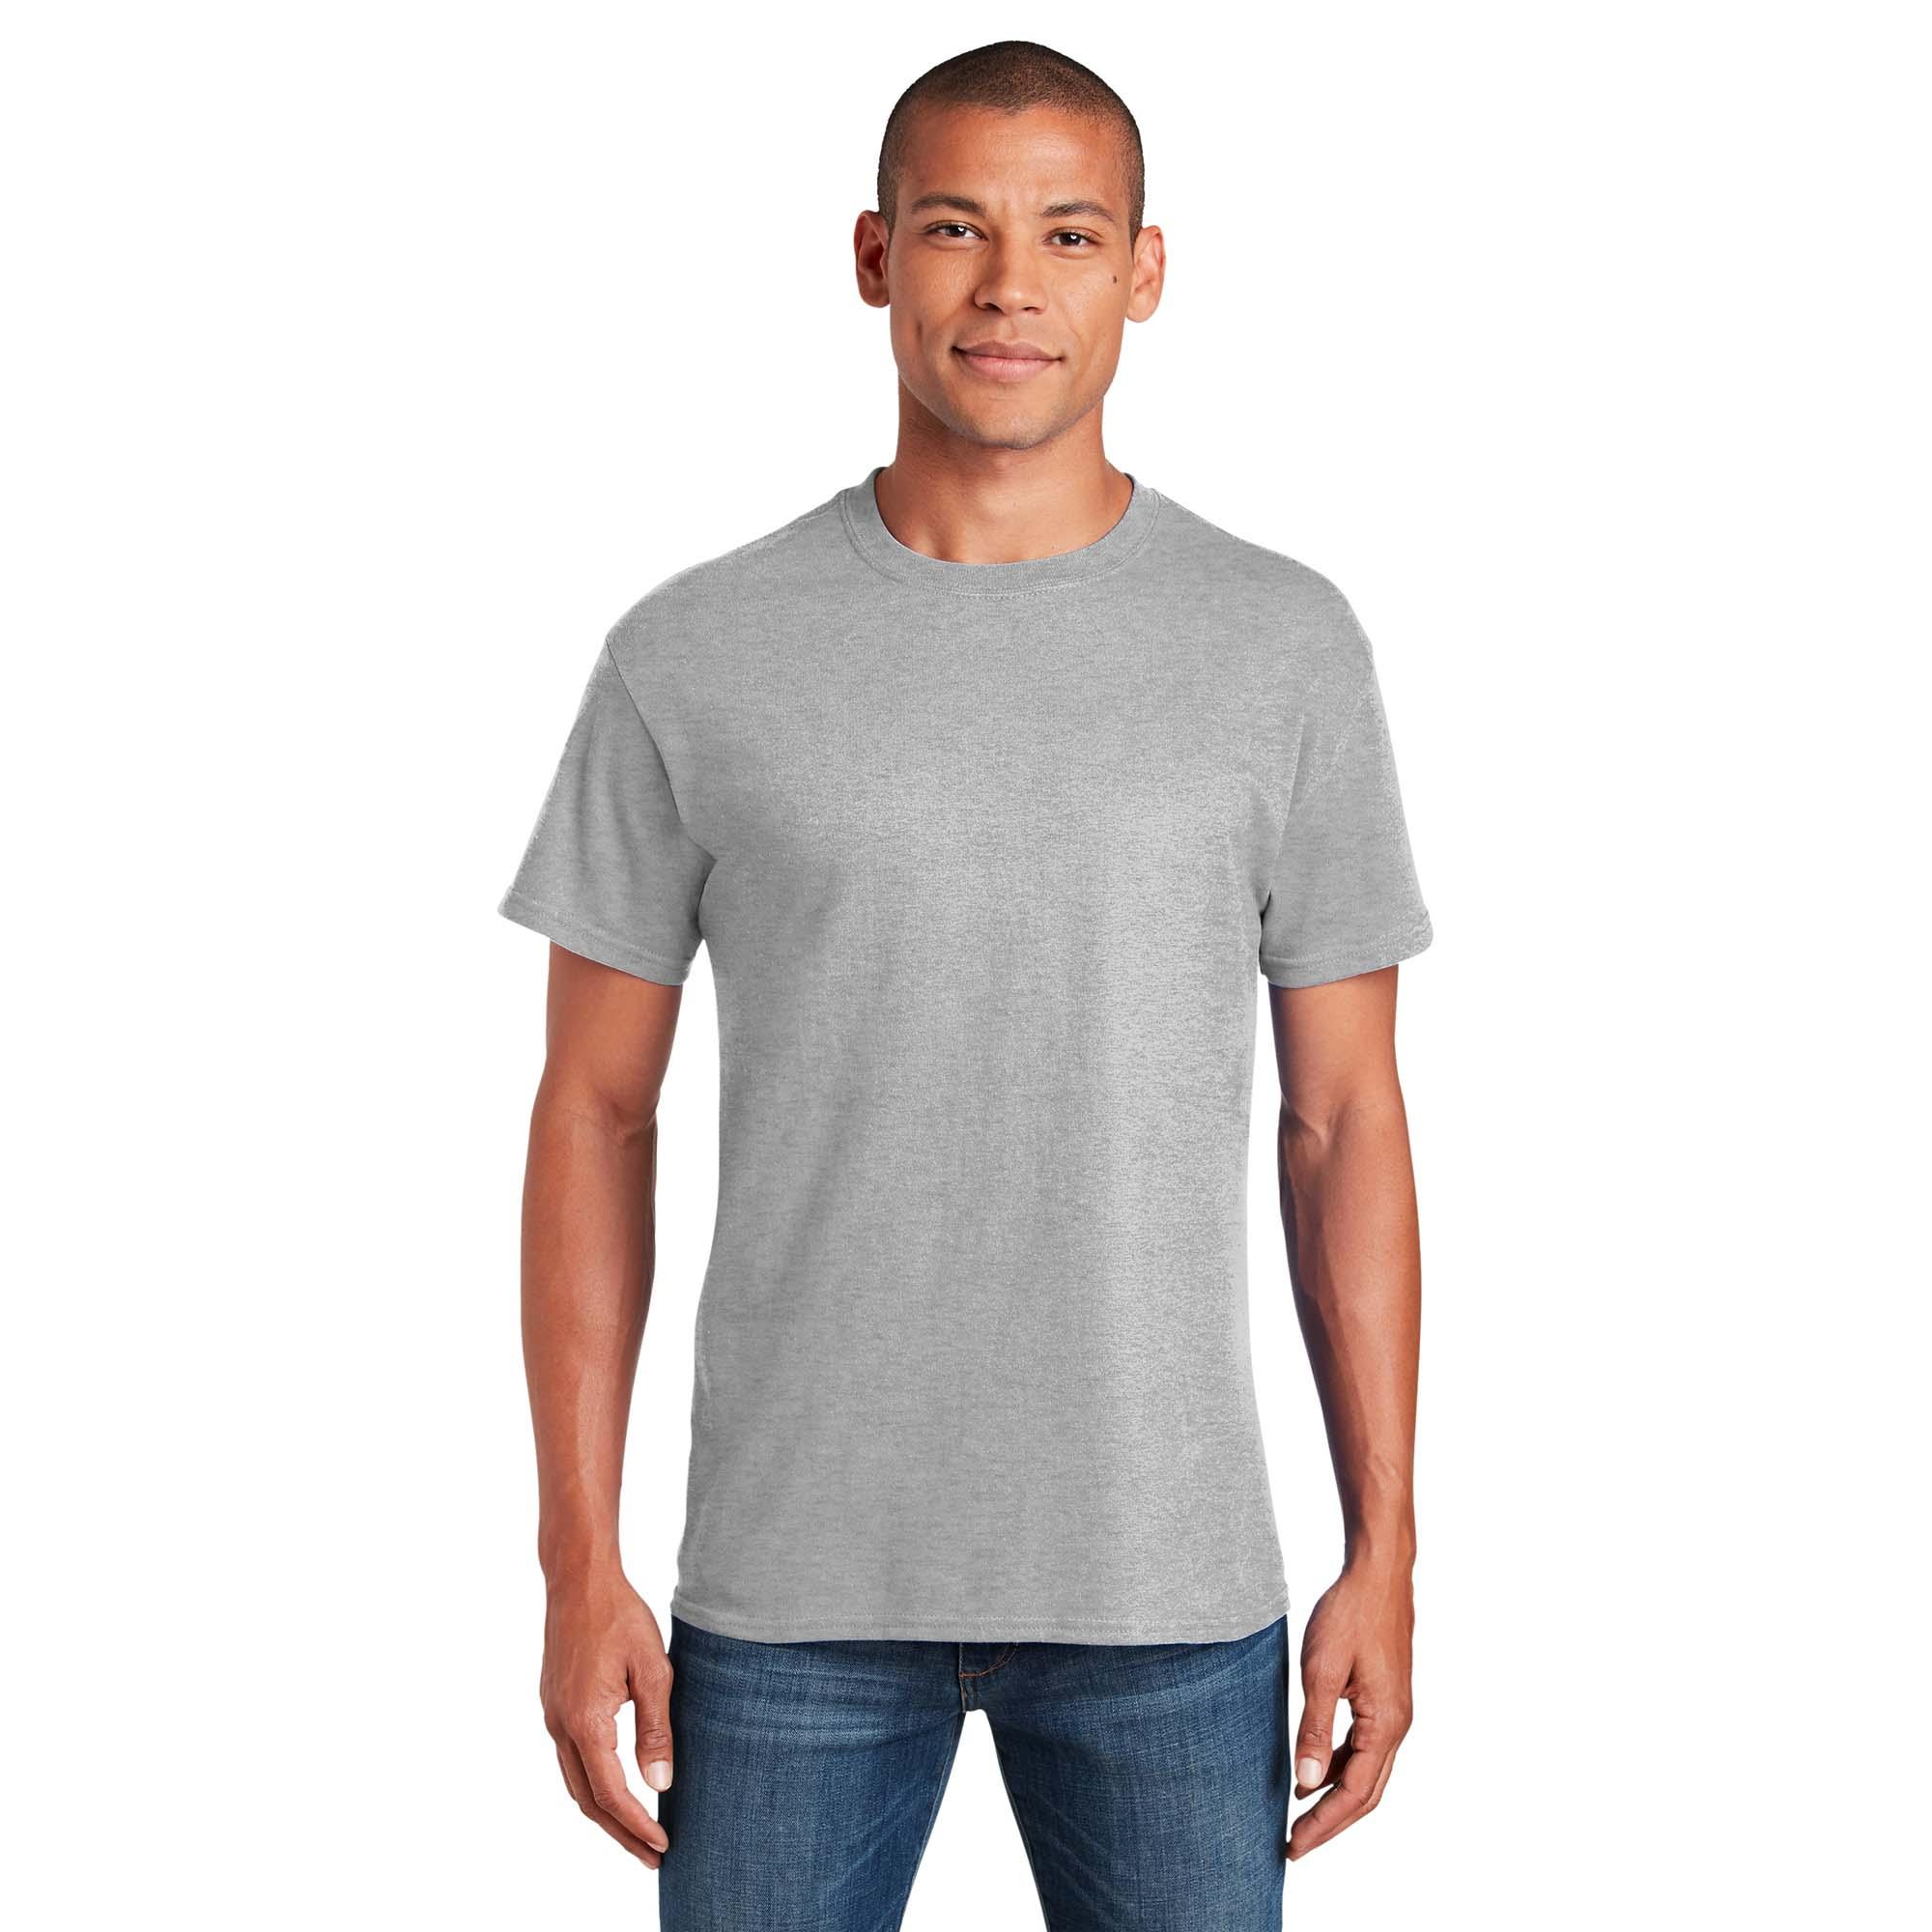 Heavy T-Shirt - Ash | FullSource.com